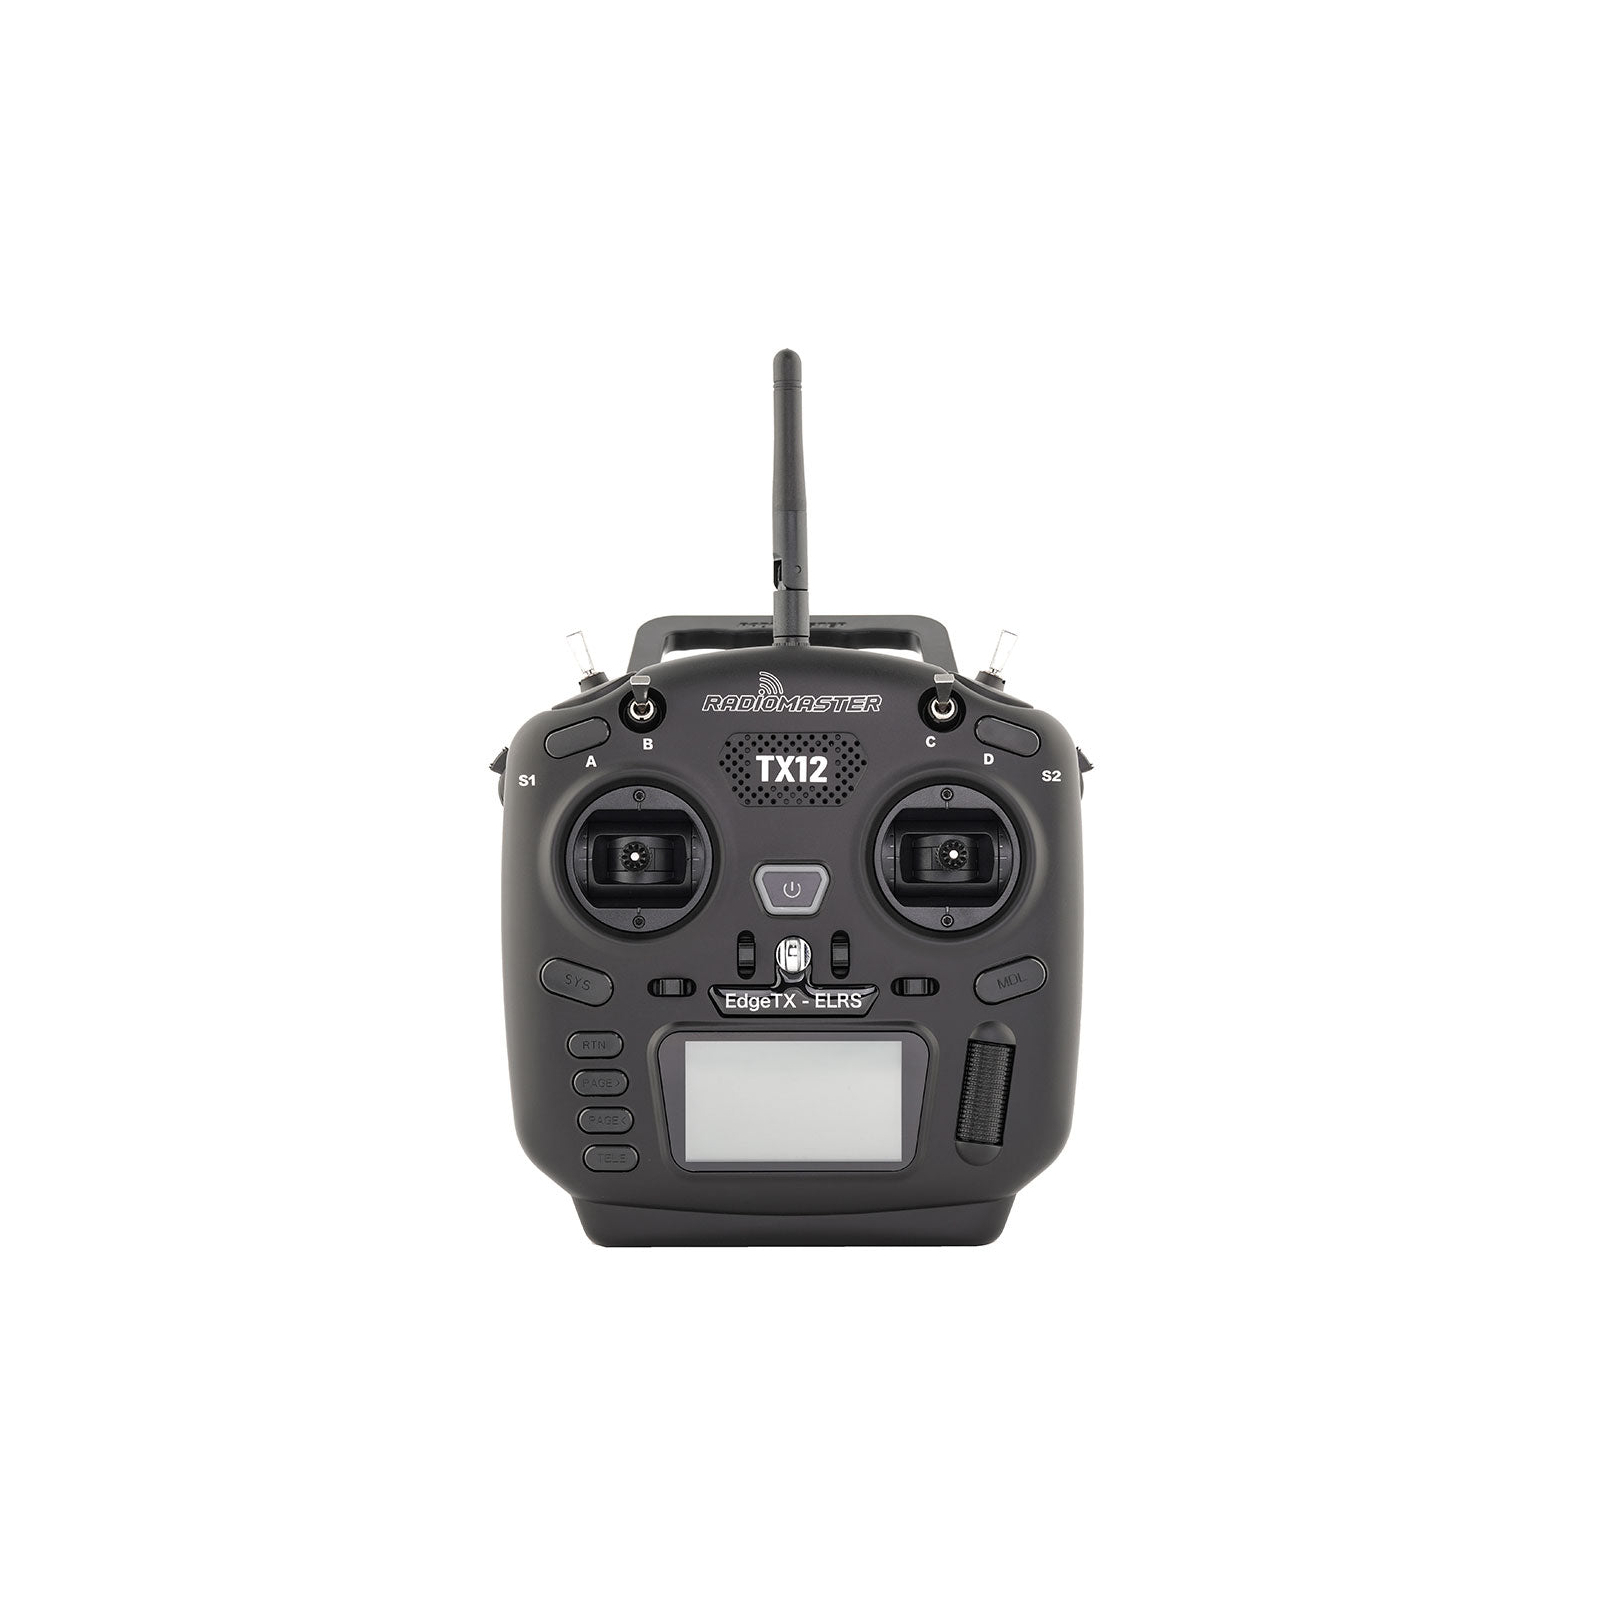 Пульт управления для дрона RadioMaster TX12 MKII ExpressLRS Edge TX (HP0157.0032-M2)